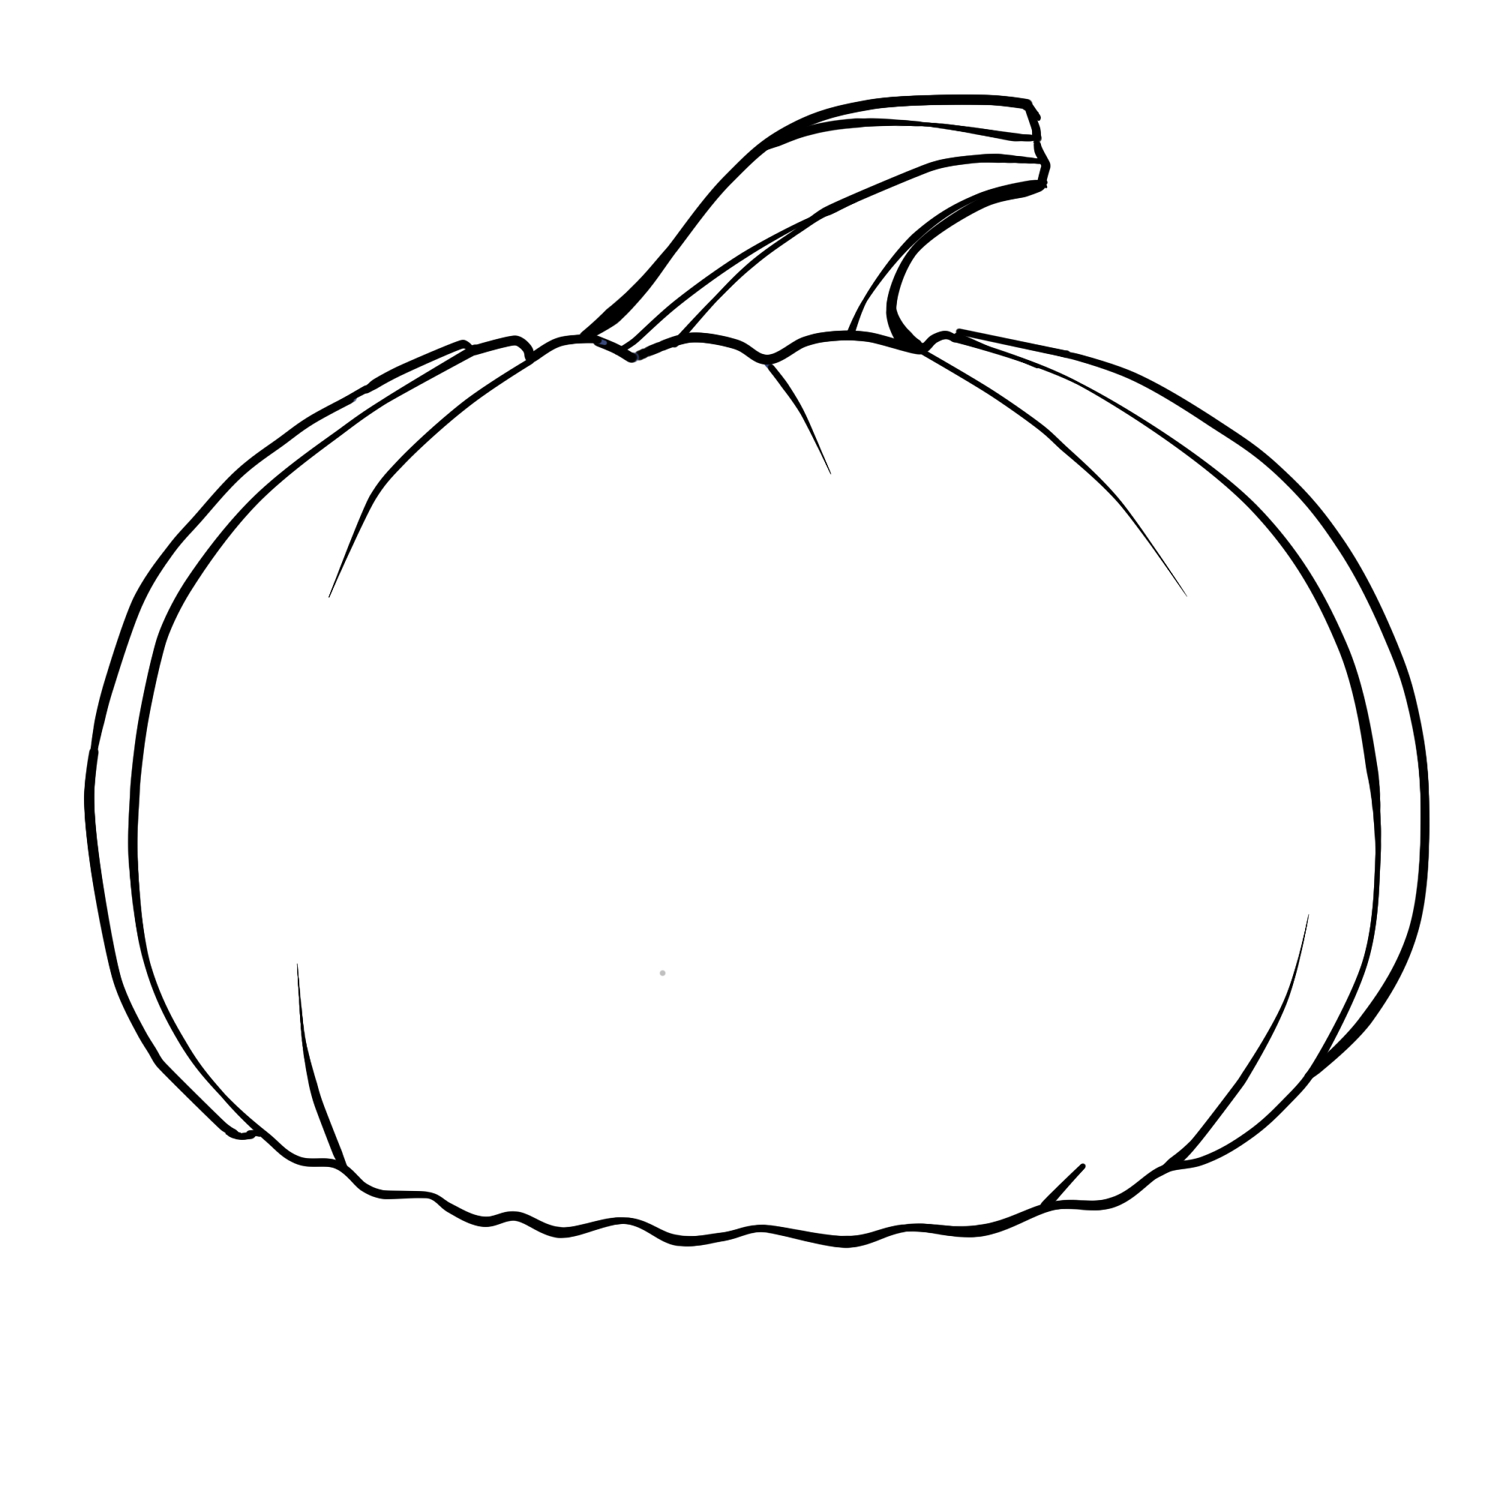 Free Printable Pumpkin Coloring Pages For Kids | Applique - Pumpkin Shape Template Printable Free